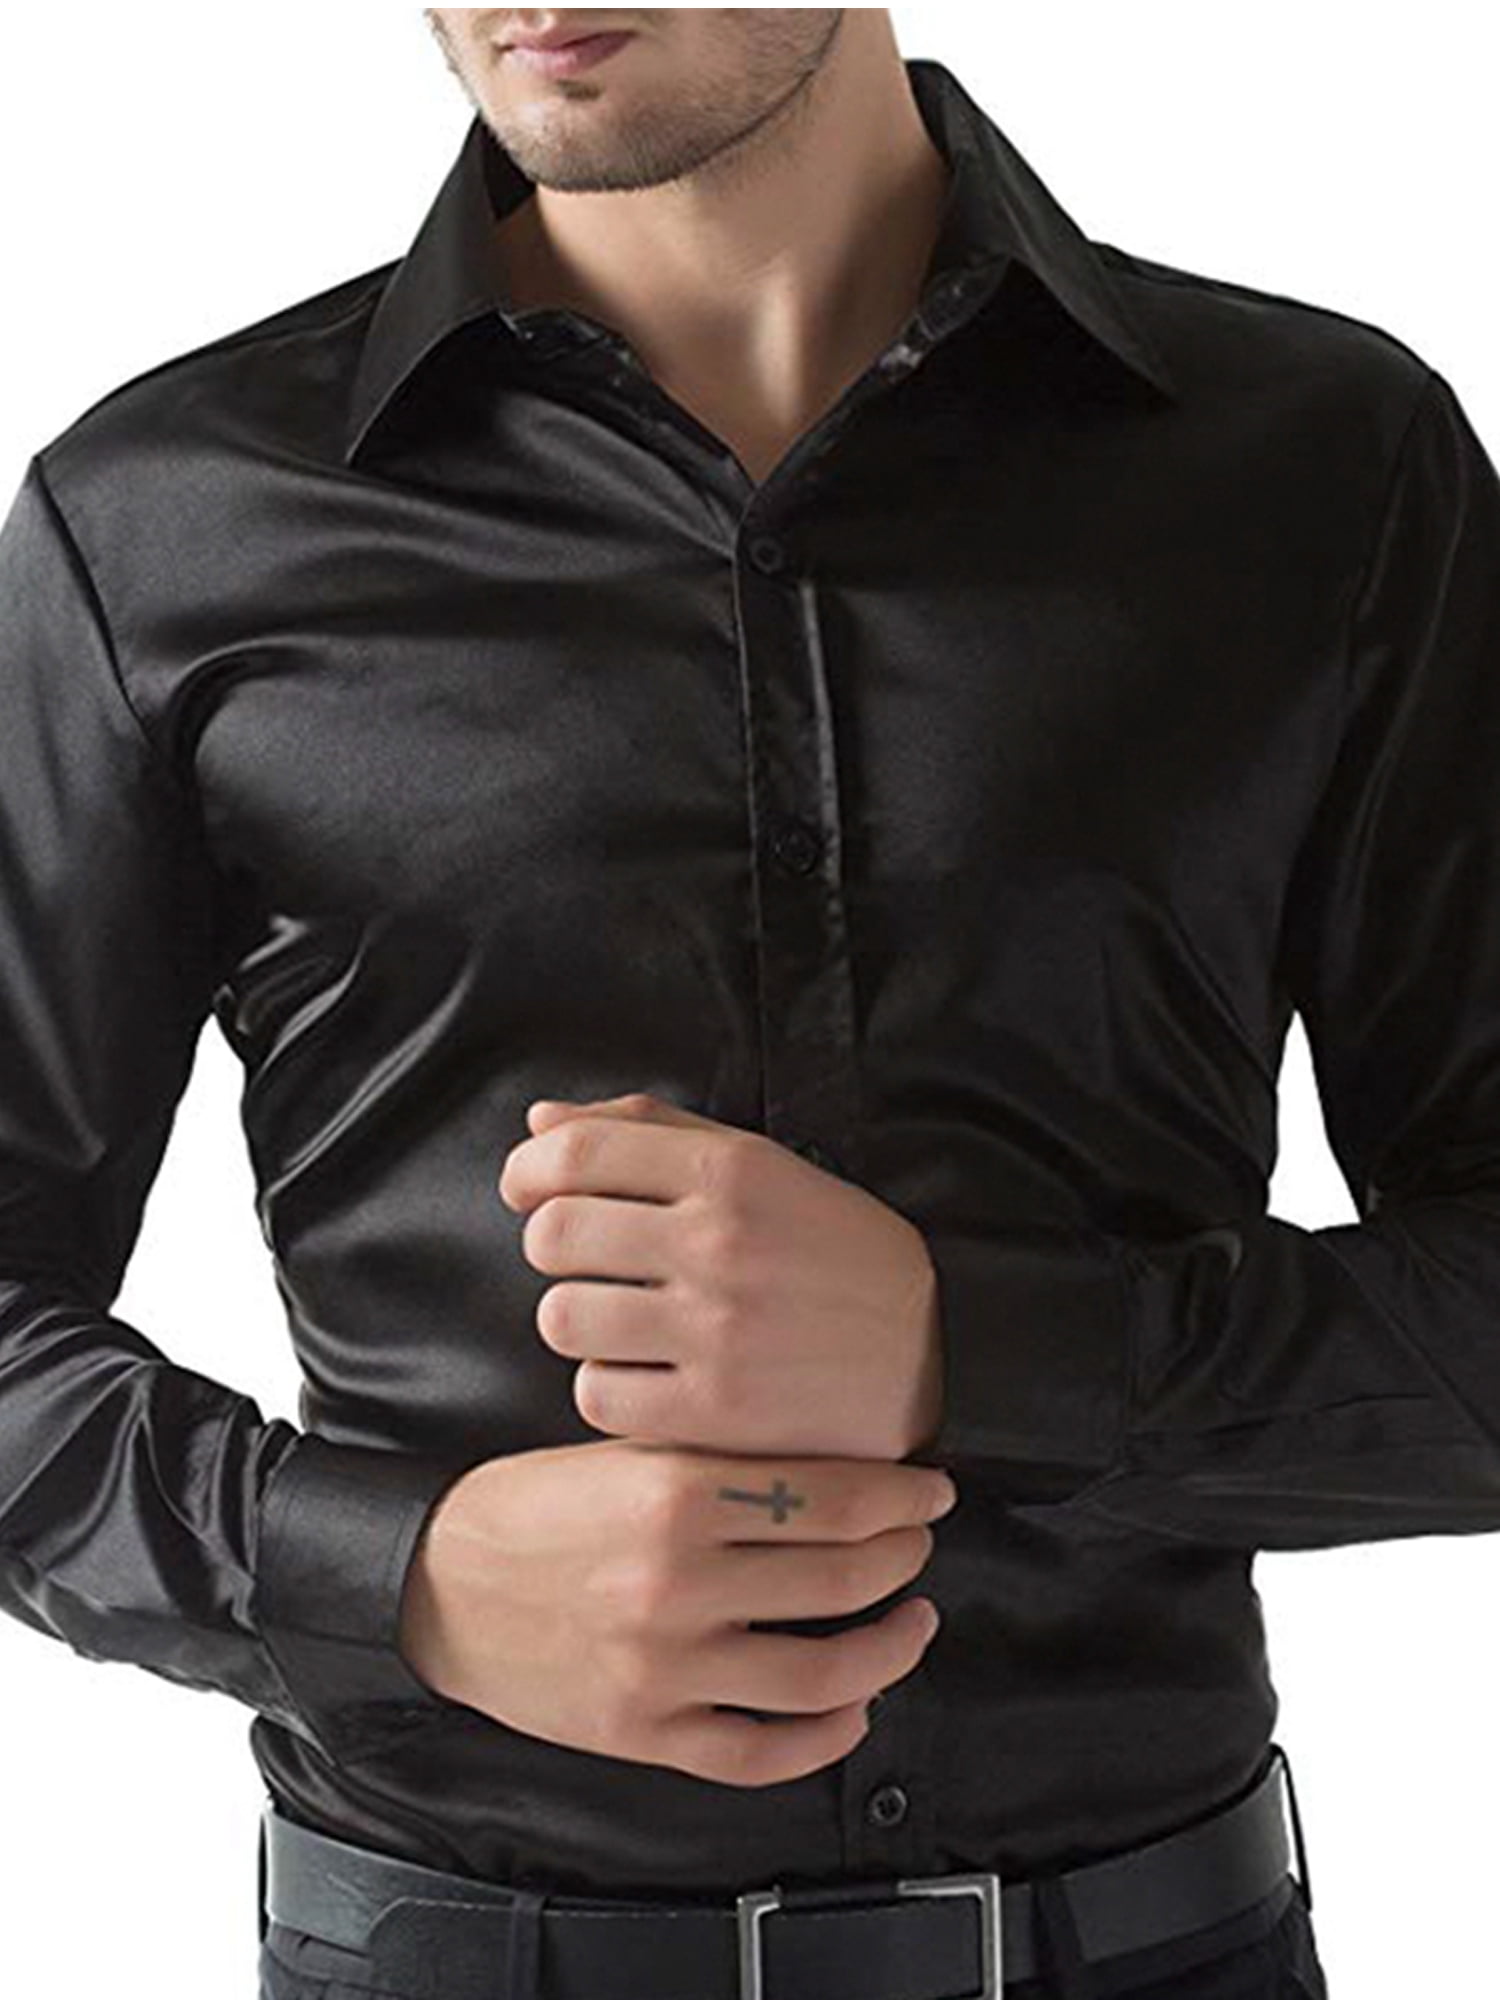 Designer Shirts for Men - Dress, Button Down, Collared Shirts